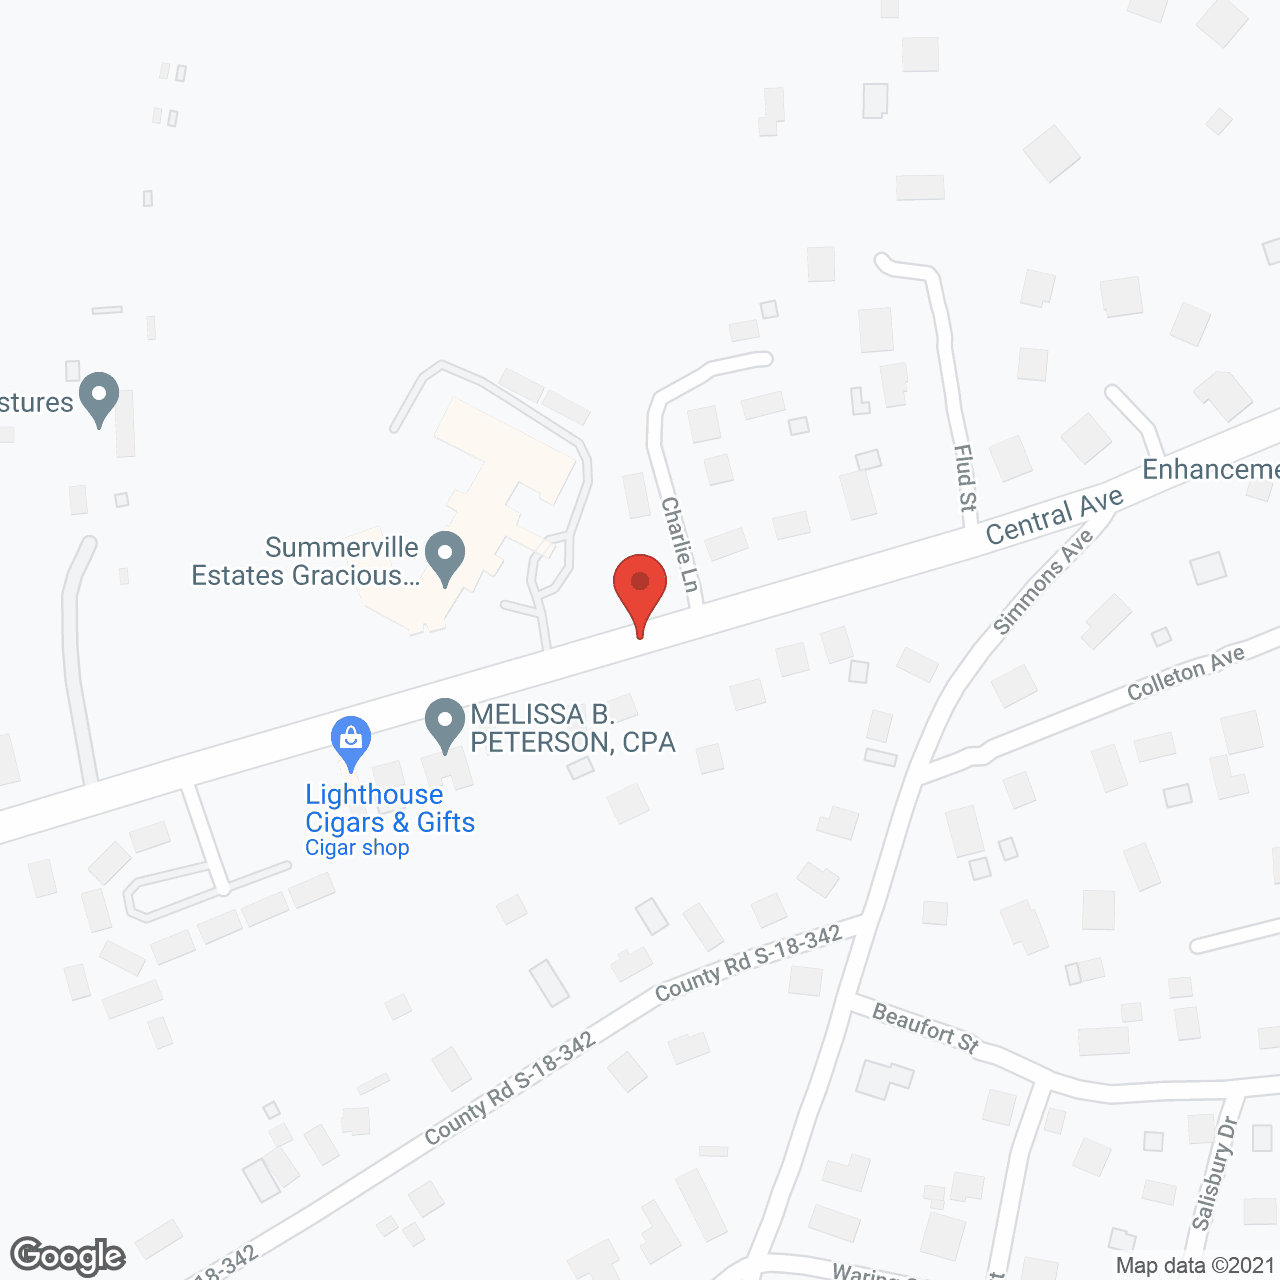 Summerville Estates in google map